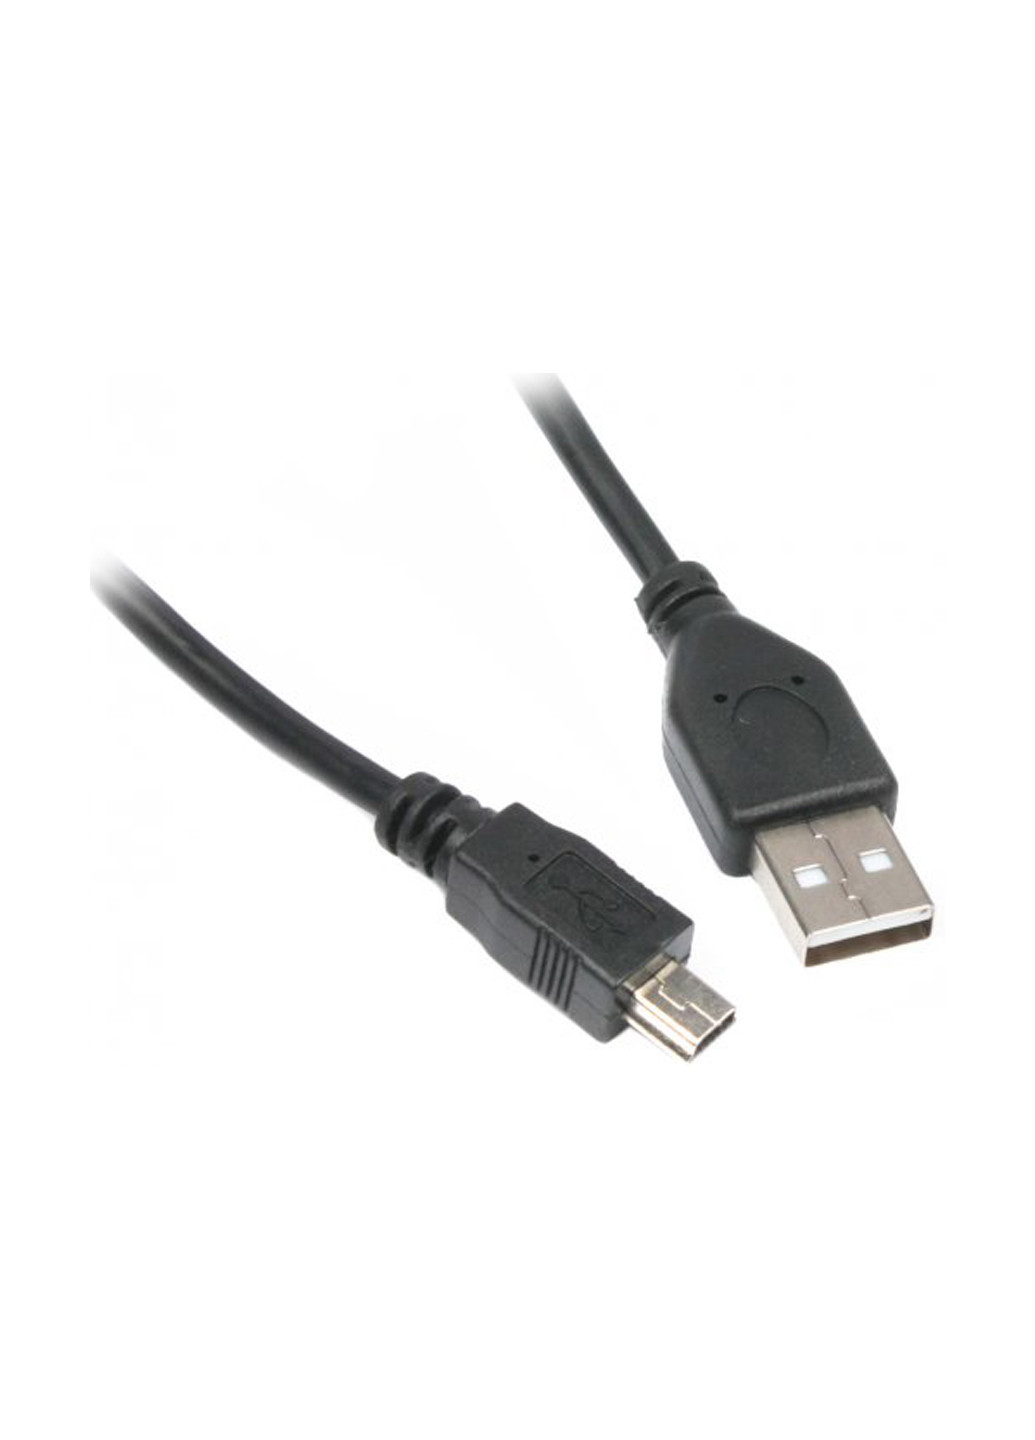 Кабель міні USB2.0 AM / 5P, 1.8 м. (U-AM5P-6) Maxxter мини usb2.0 am/5p, 1.8 м. (u-am5p-6) (137703611)